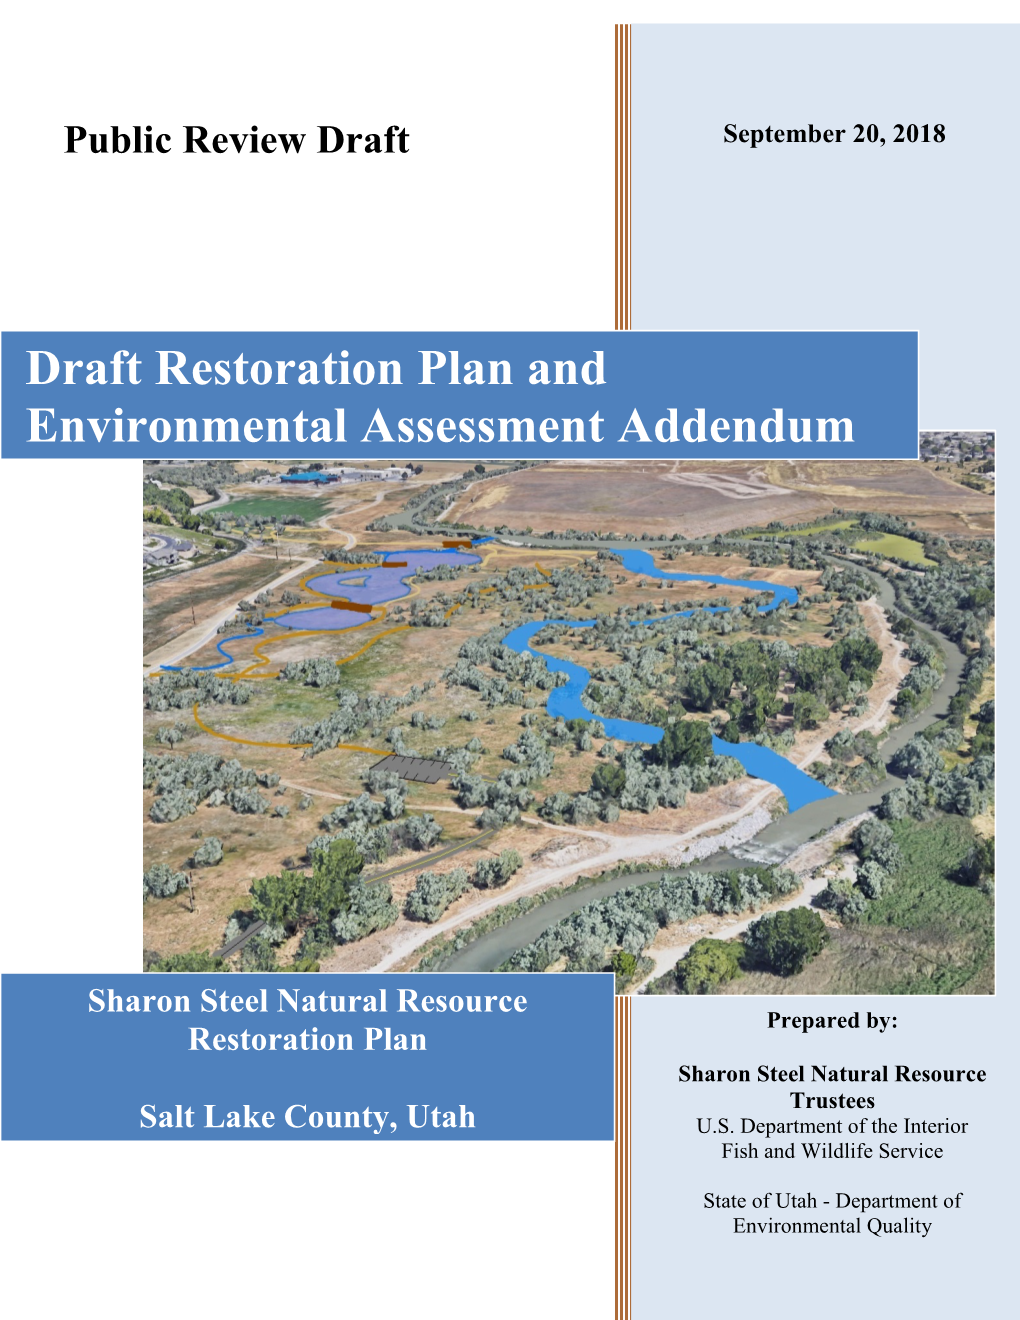 Draft Restoration Plan and Environmental Assessment Addendum